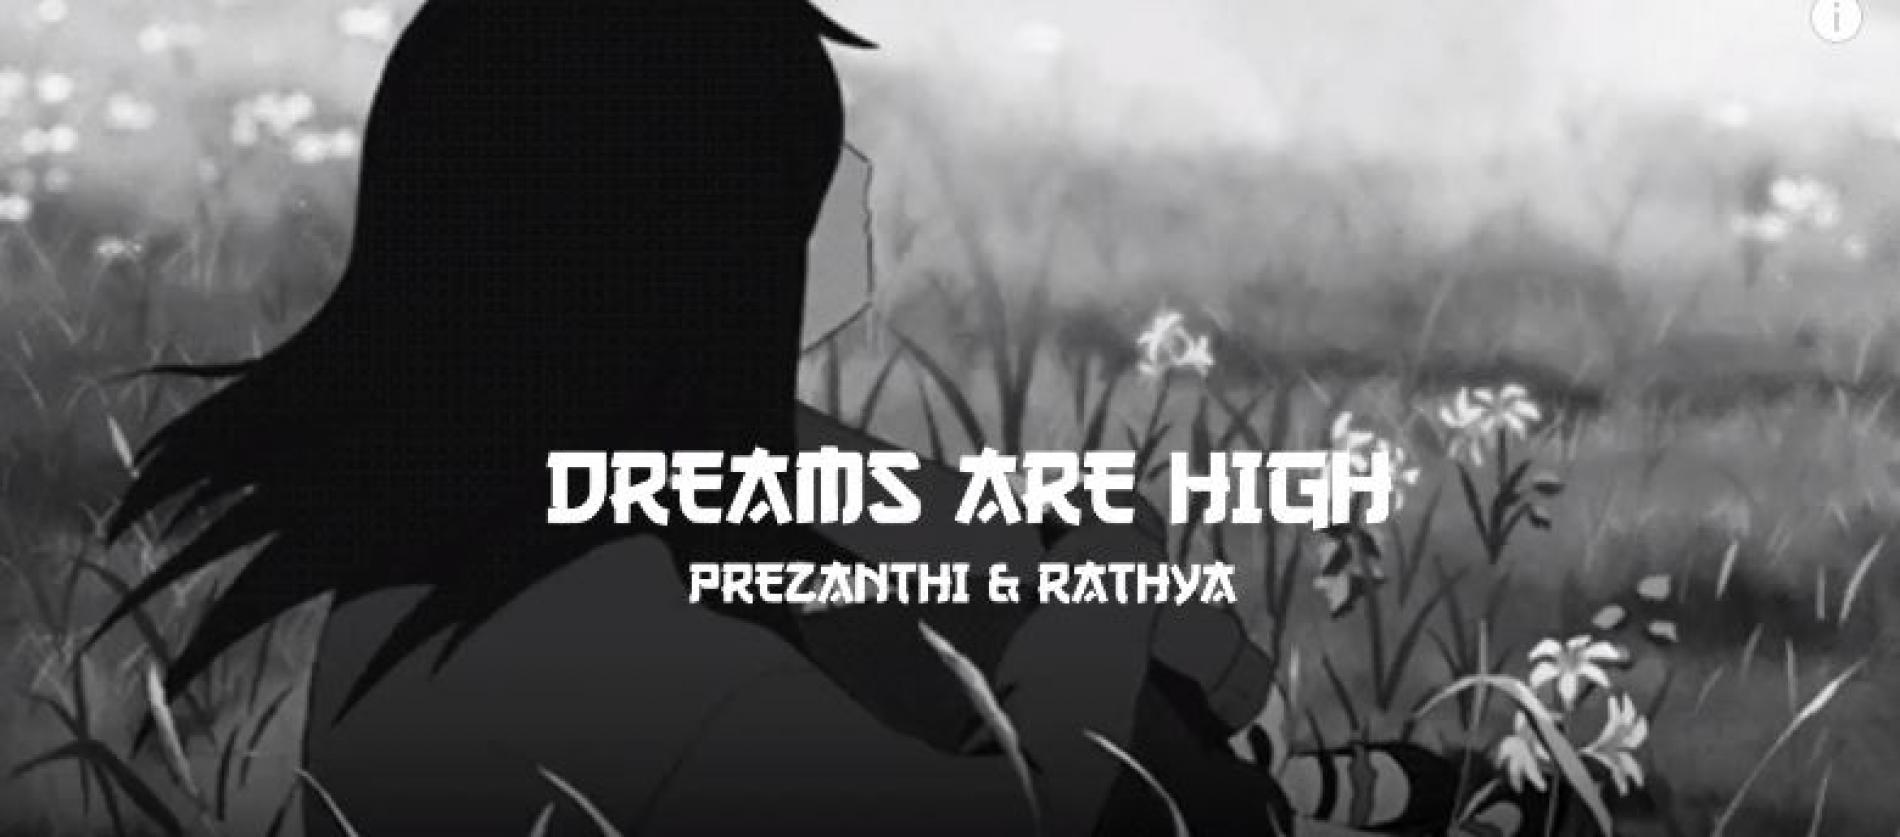 New Music : Dreams Are High – Ayeshmantha Ft Prezanthi & Rathya